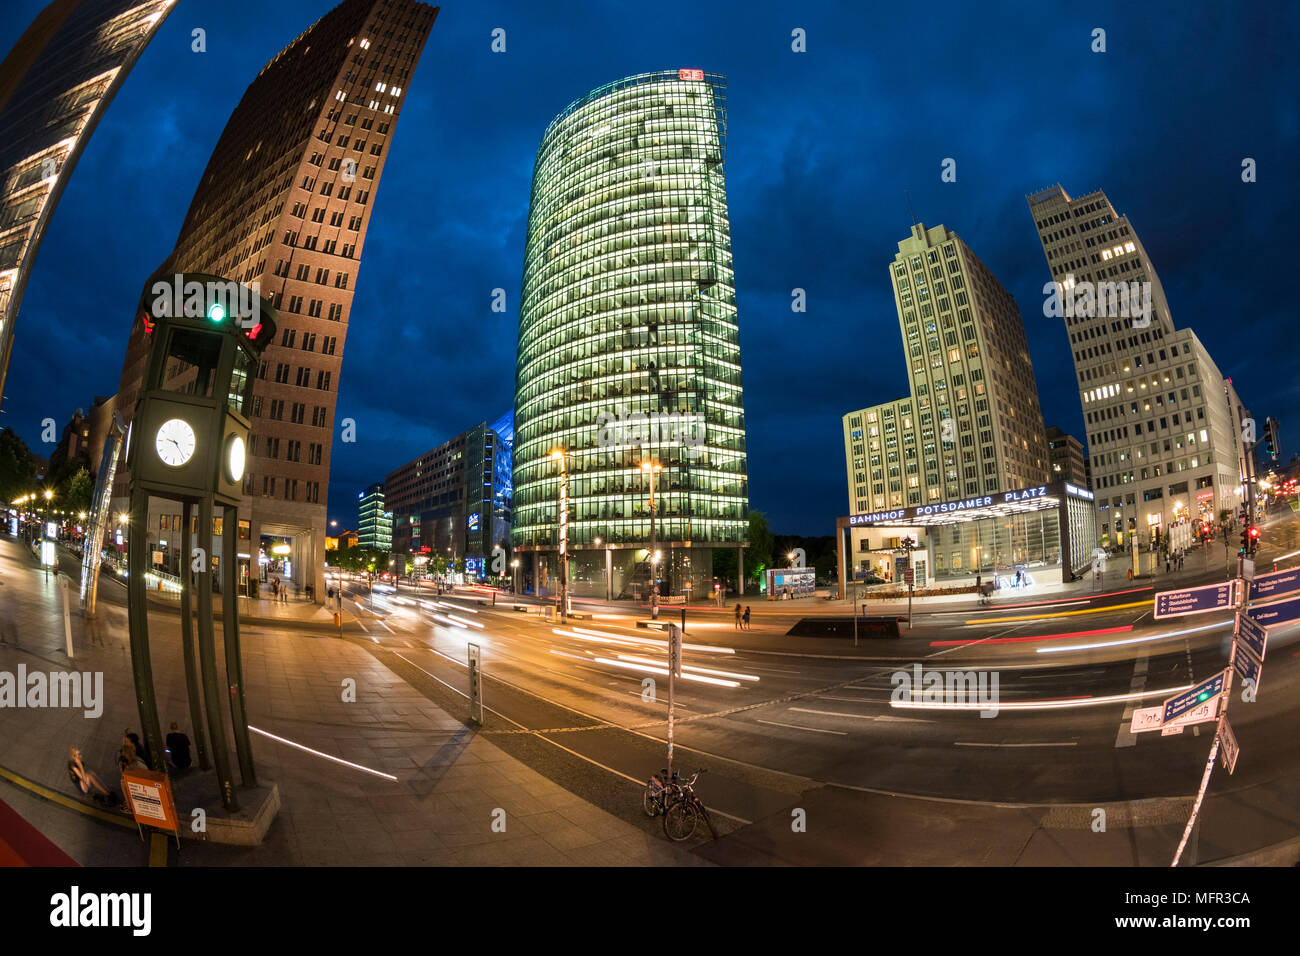 Berlin. L'Allemagne. La Potsdamer Platz, le fisheye vue nocturne de gratte-ciel. L-R ; la Potsdamer Platz n° I (Kollhoff-Tower, Hans Kollhoff), DB Tower (Deutsche Banque D'Images